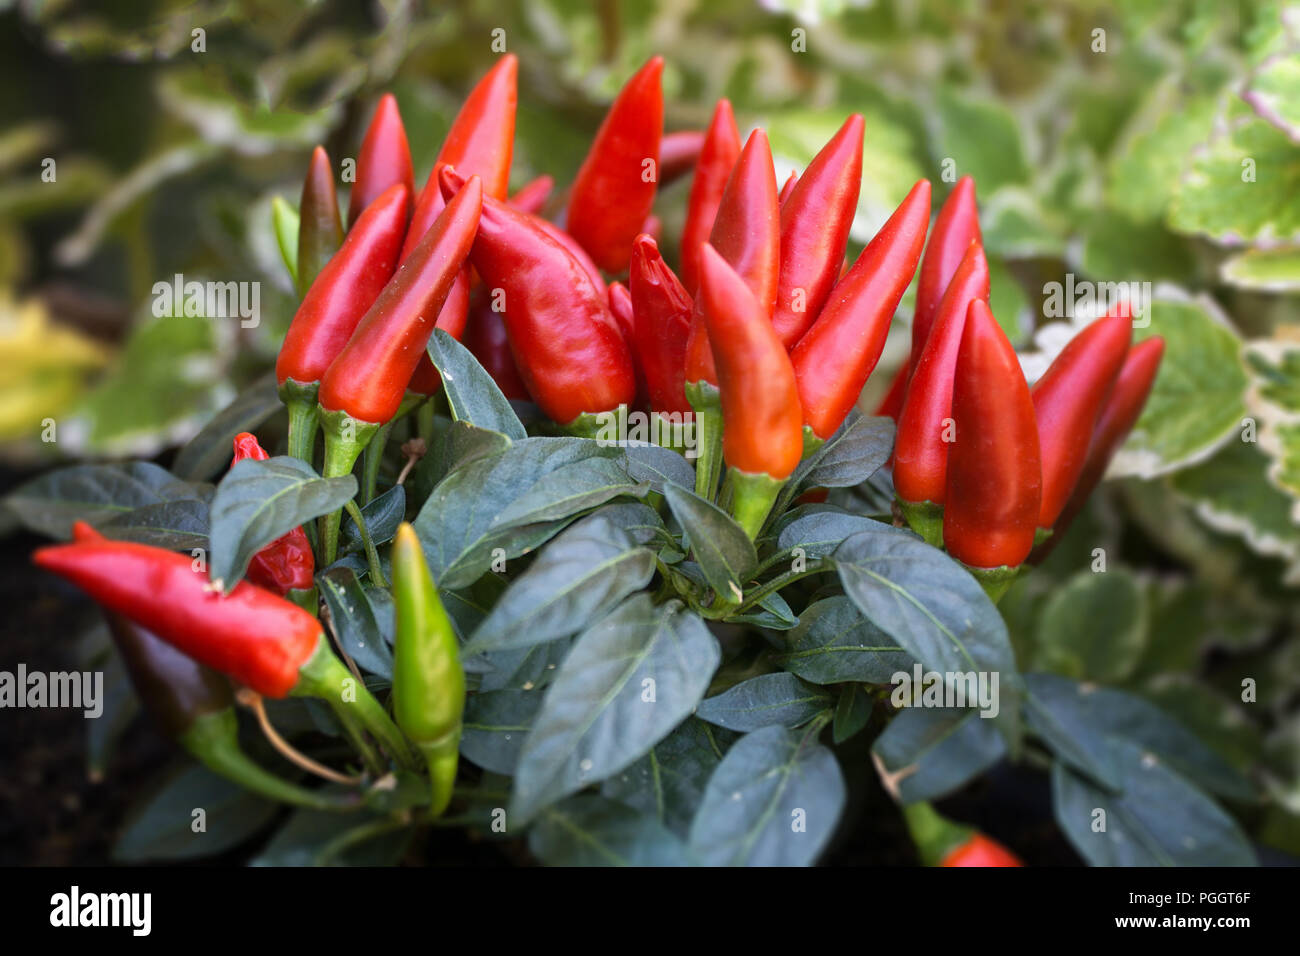 Red pepper plant (Capsicum frutescens) Stock Photo